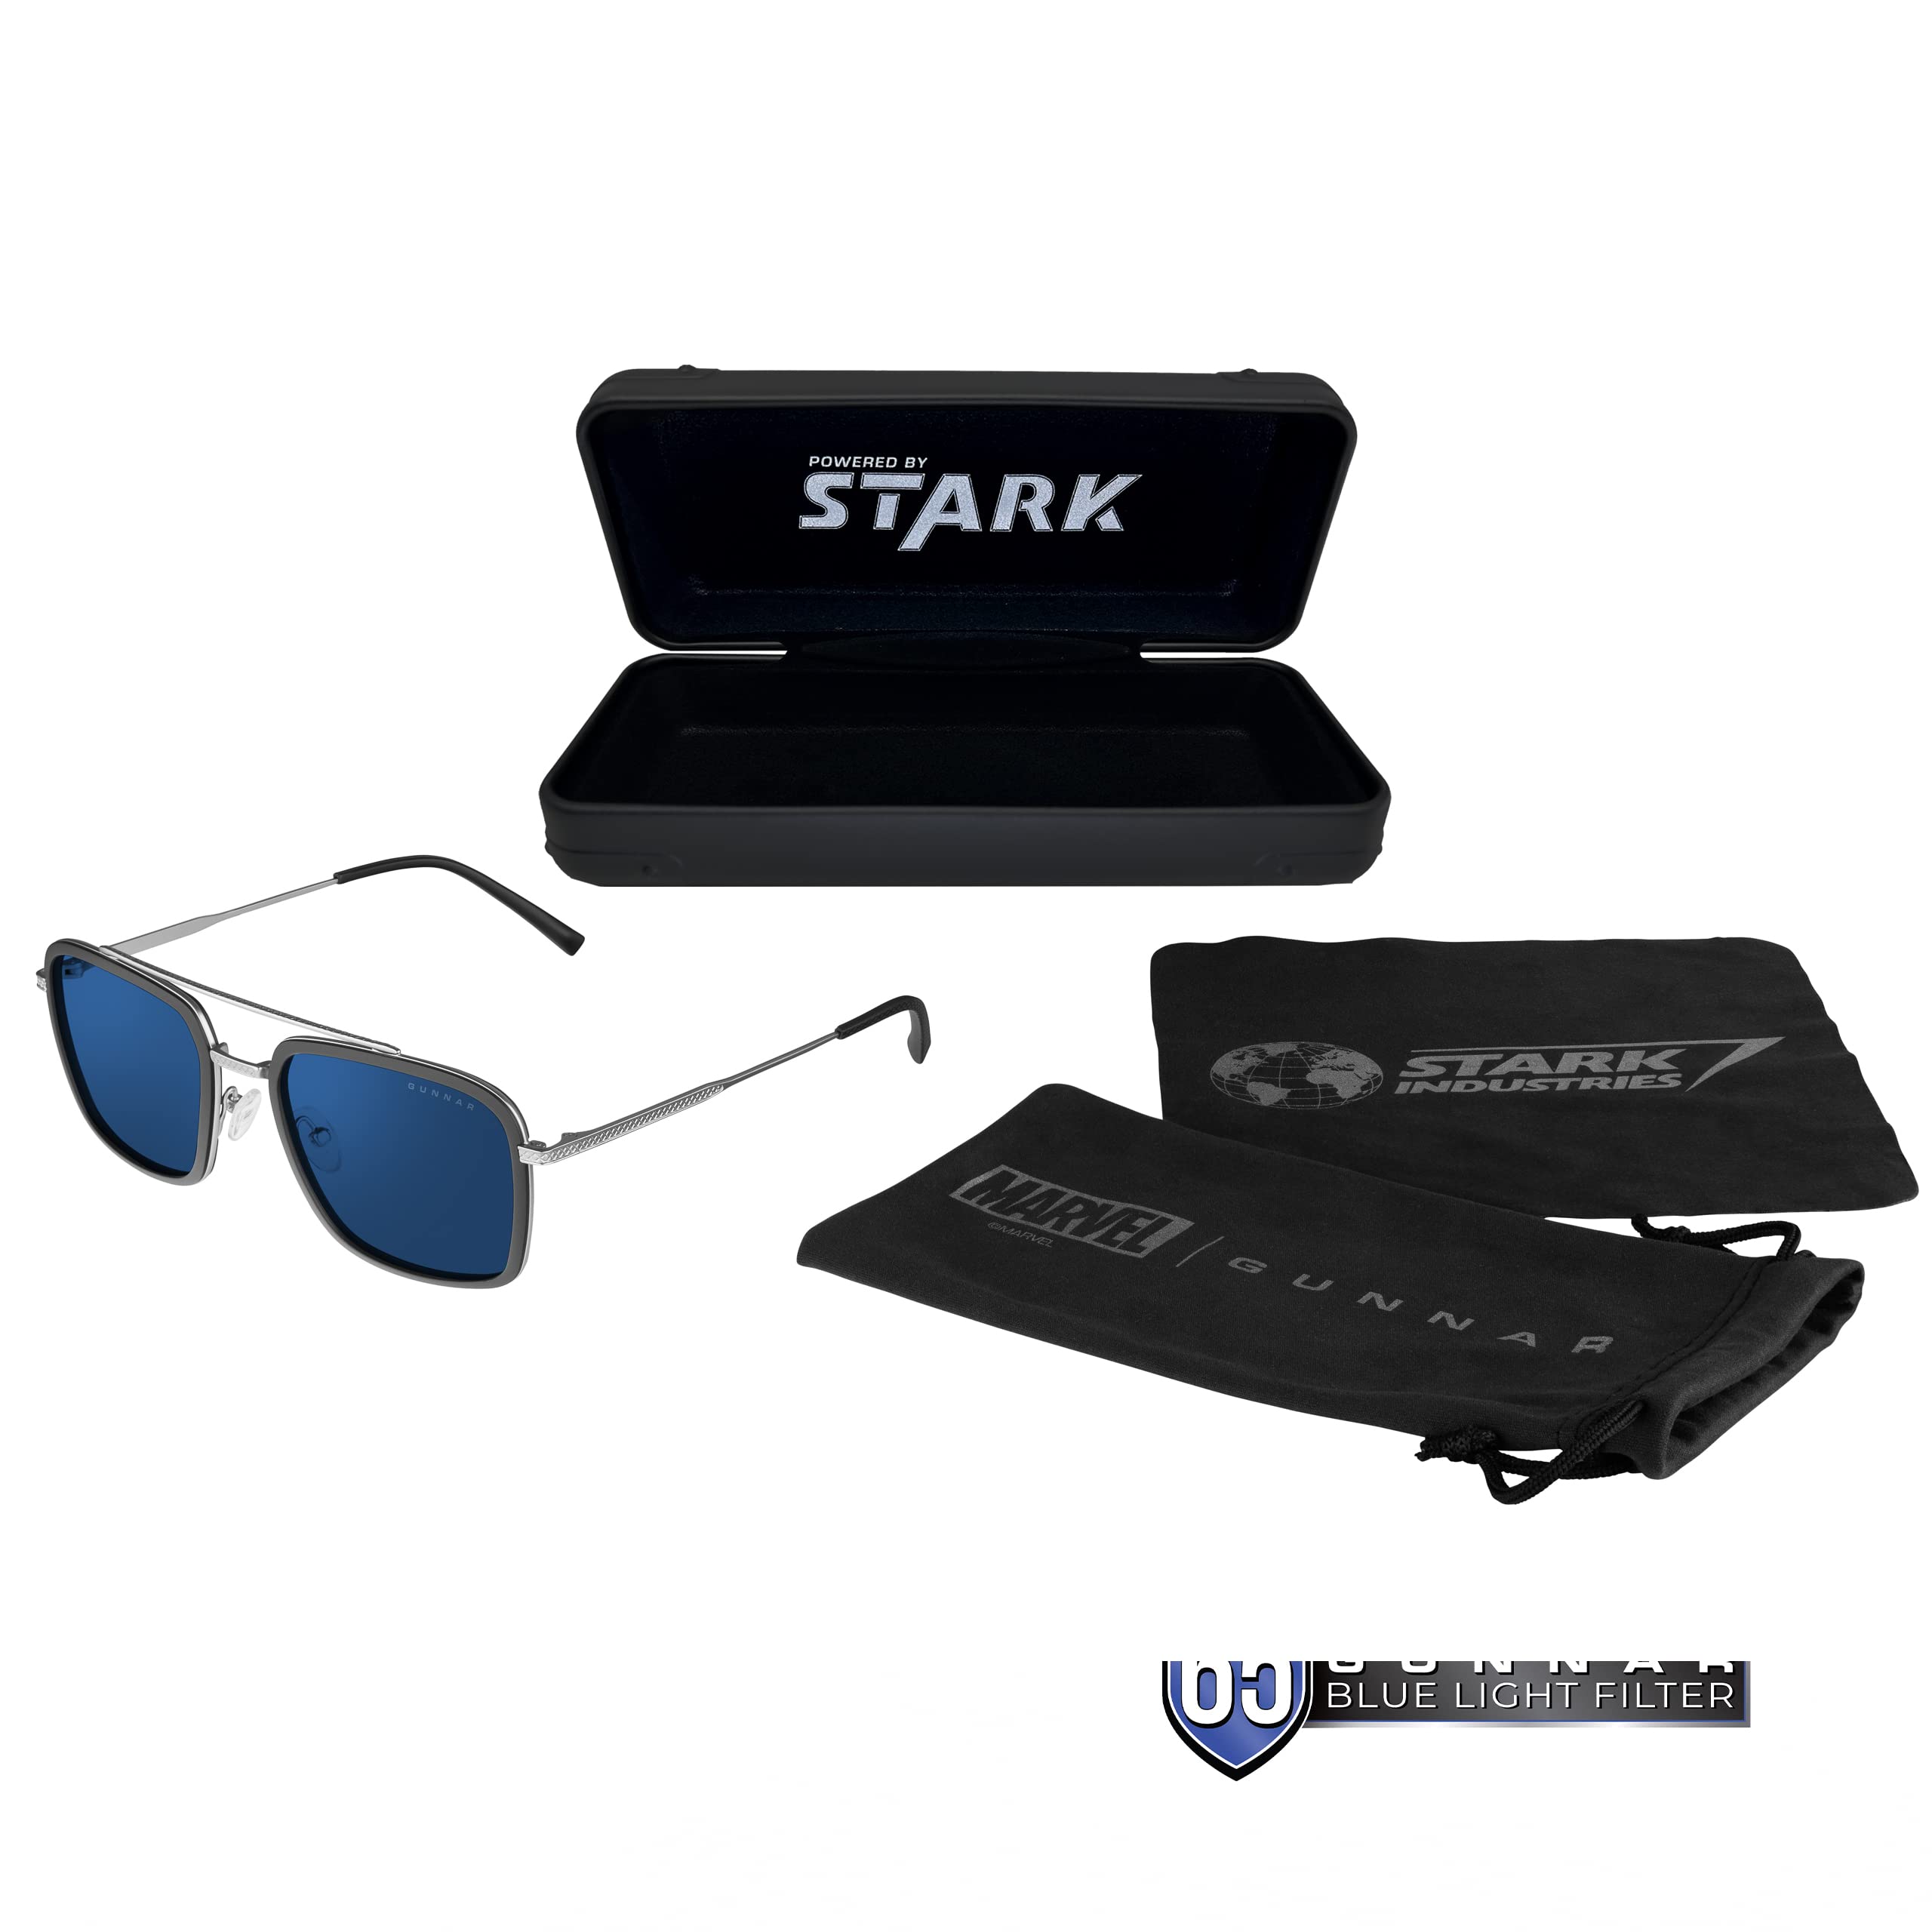 GUNNAR Stark Industries Edition Glasses (Natural-Focus Lenses, Sun Lens Tint)